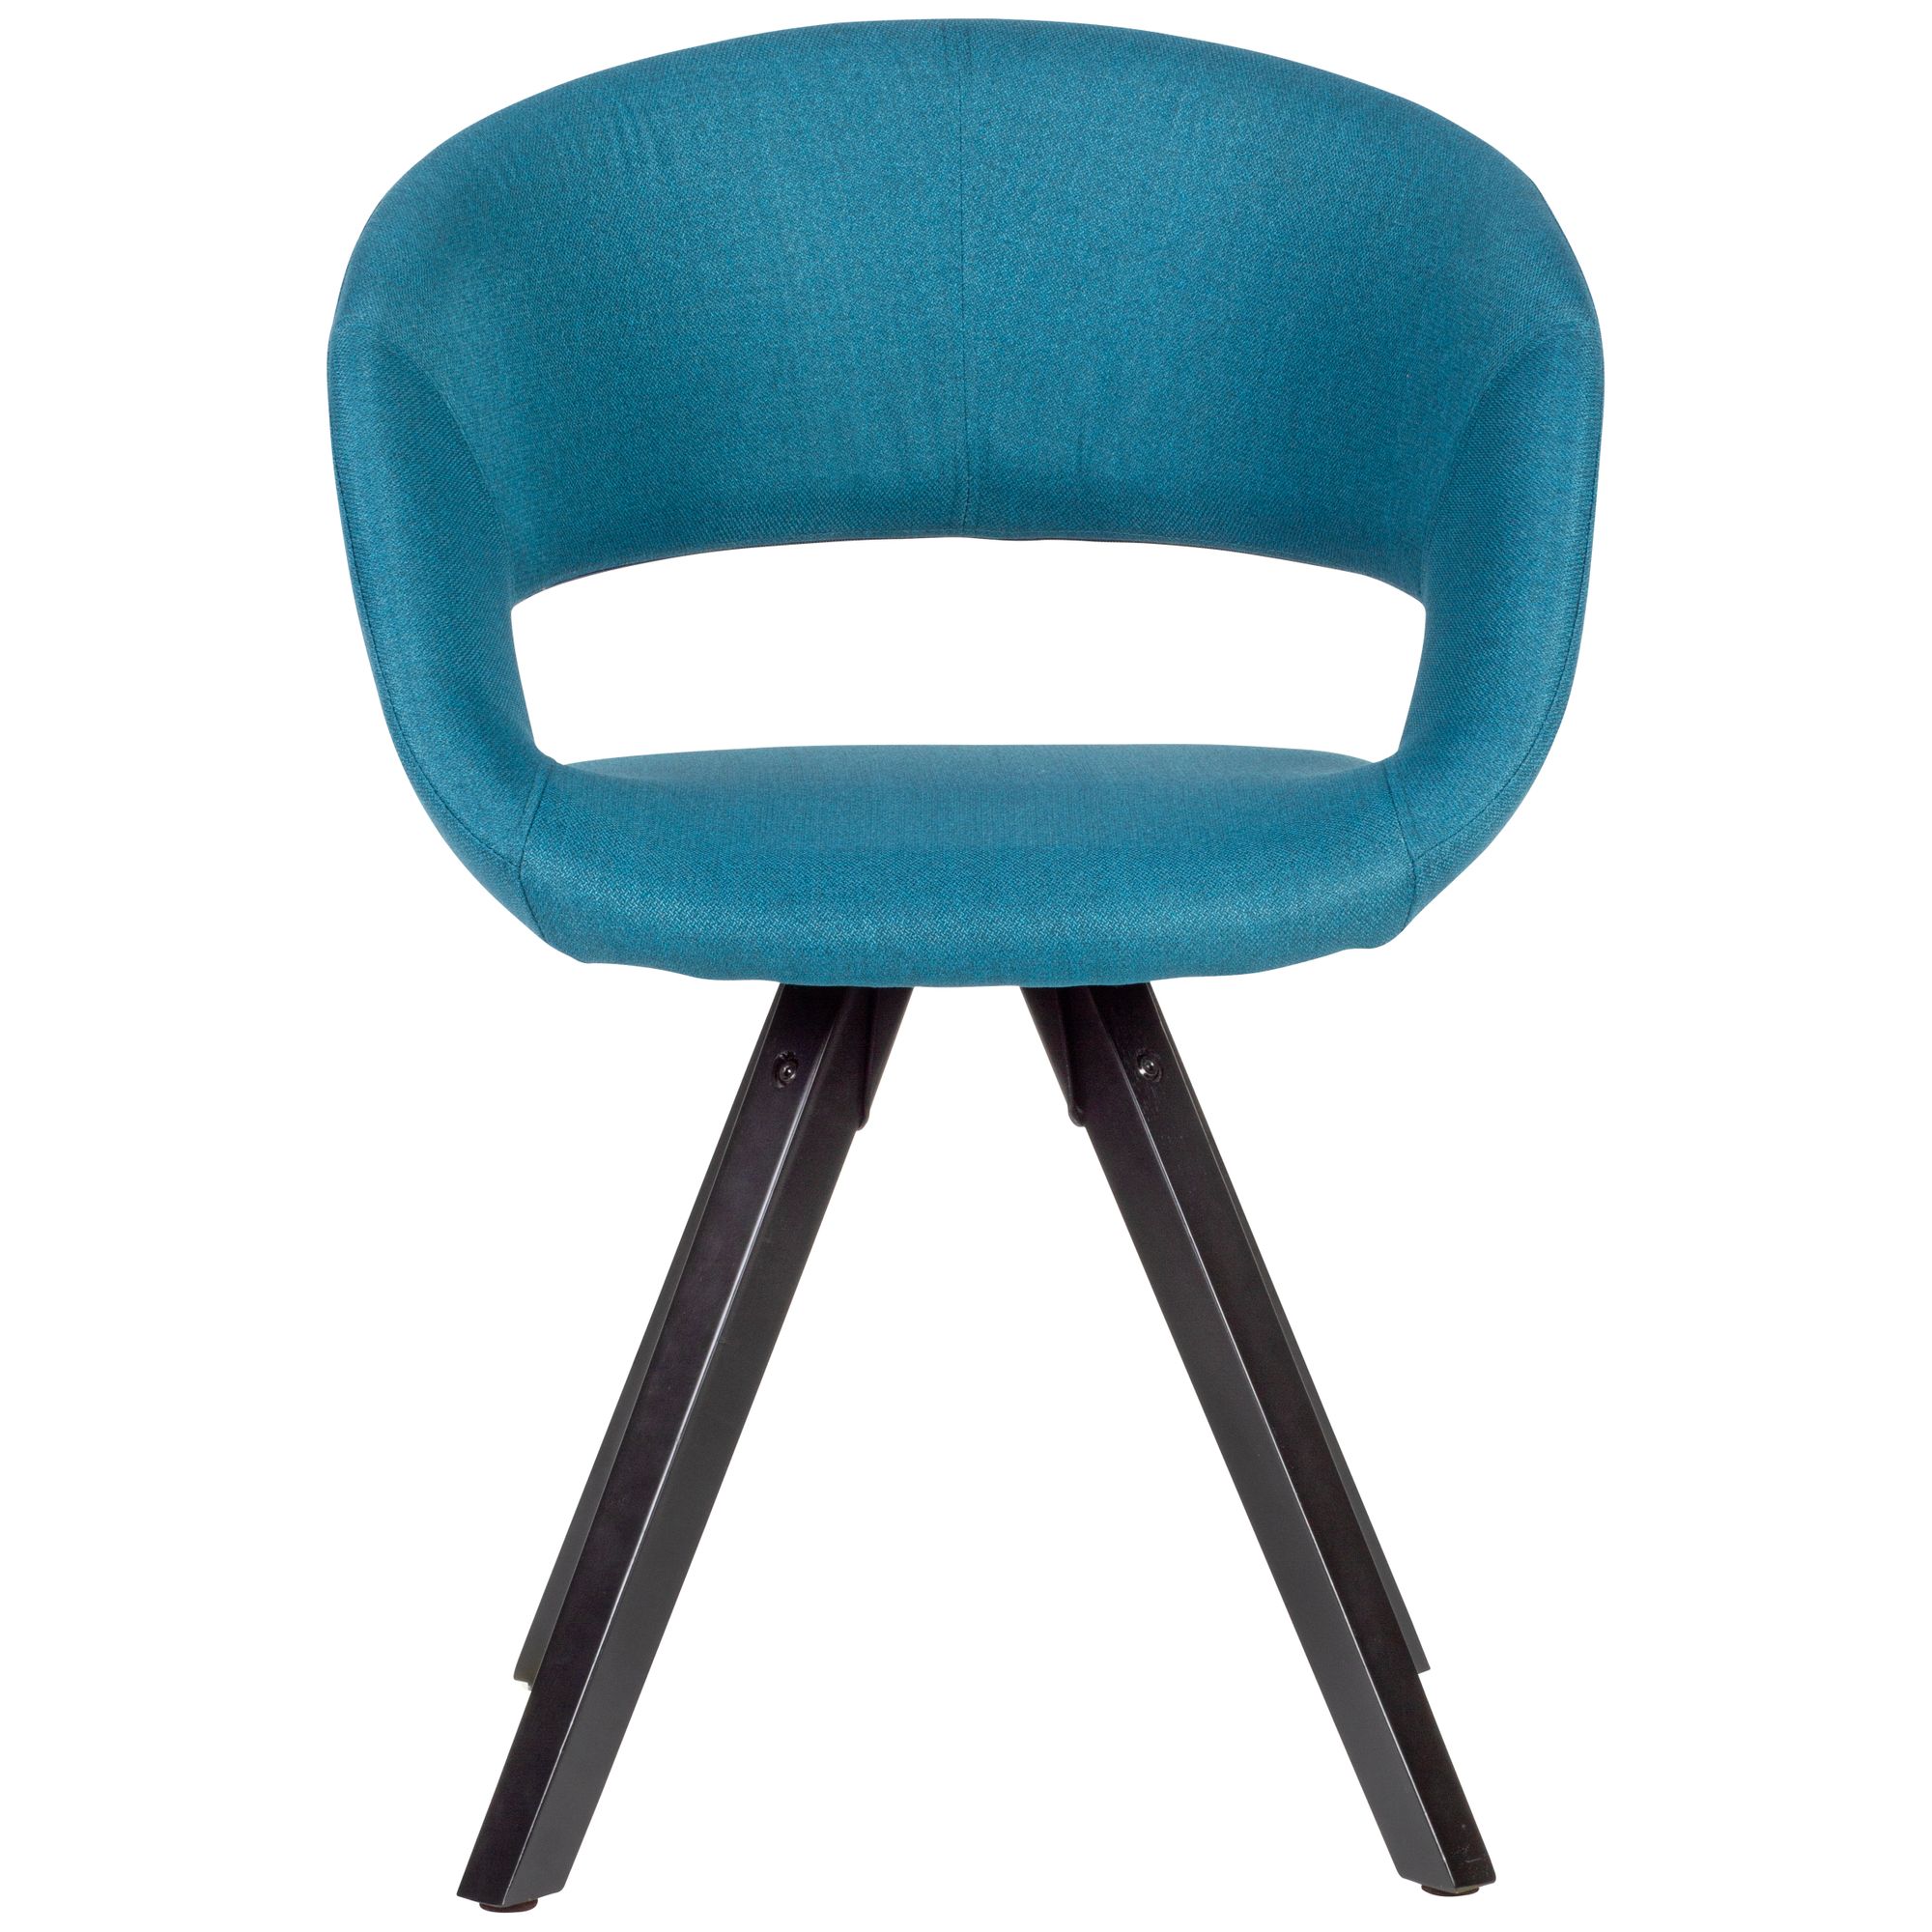 6: Spisebordsstol i polstret stof, retro-look, petrol blå med sorte ben